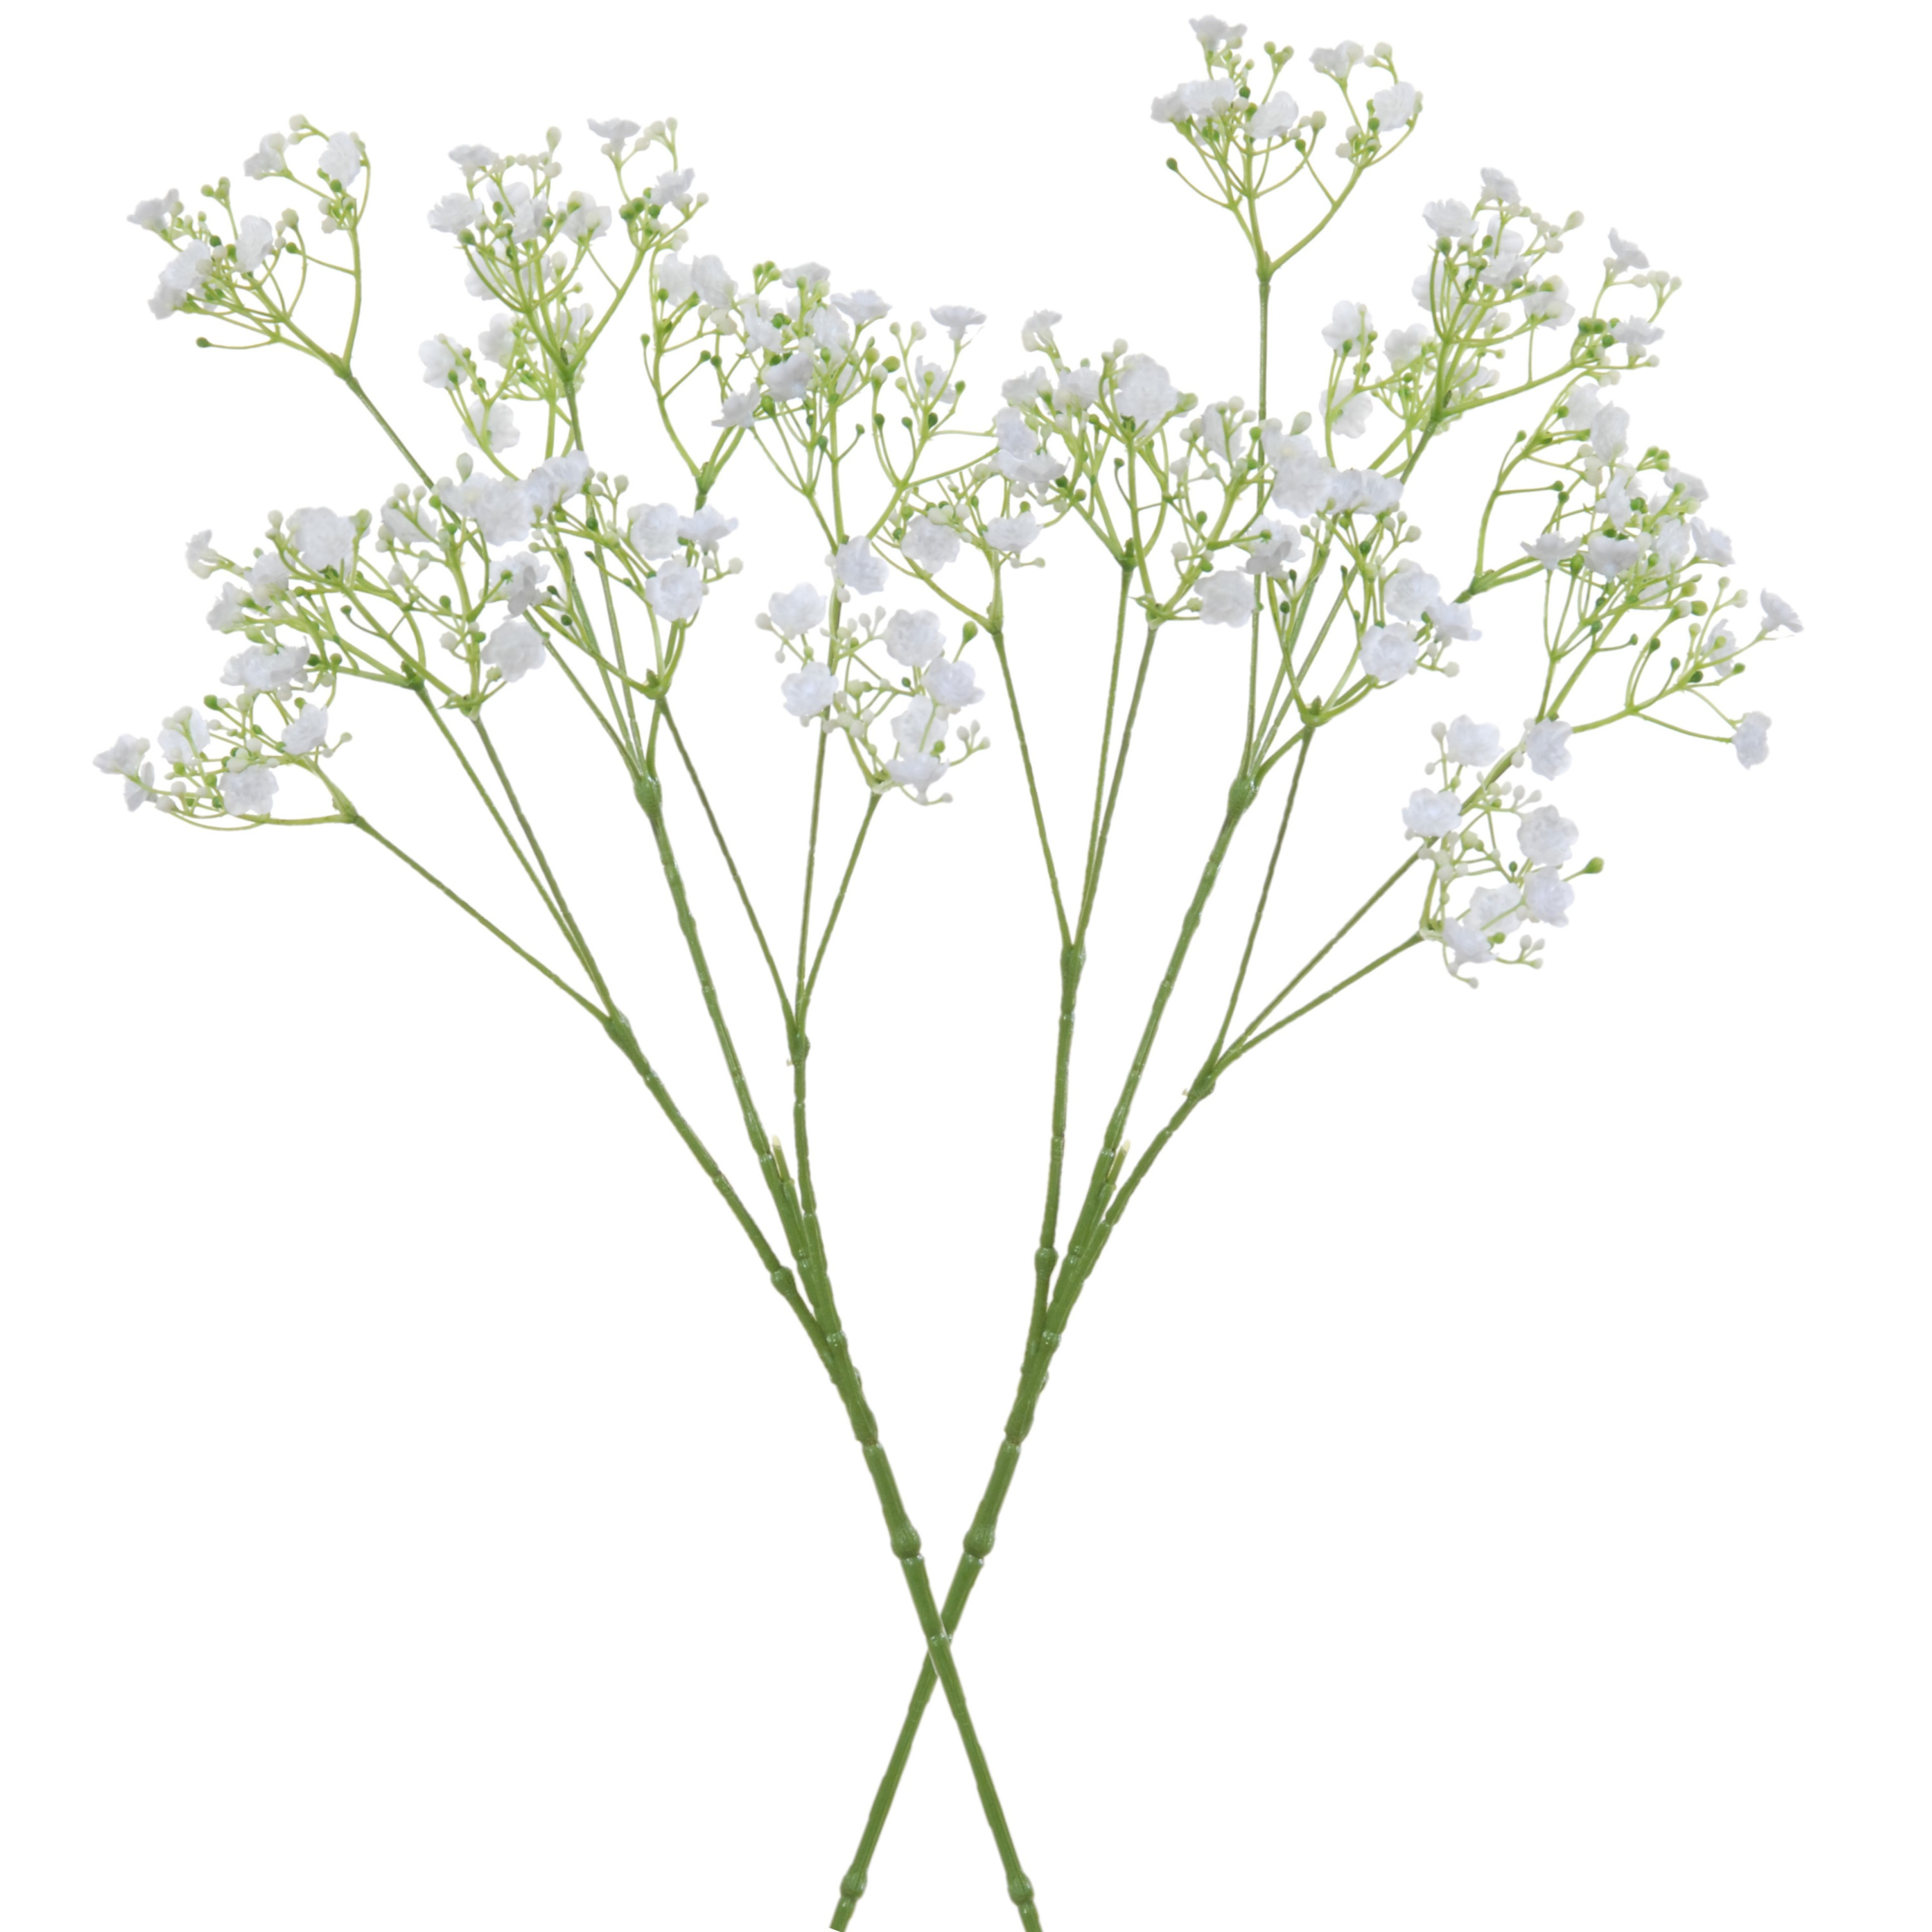 5x stuks kunstbloemen Gipskruid/Gypsophila takken wit 70 cm -